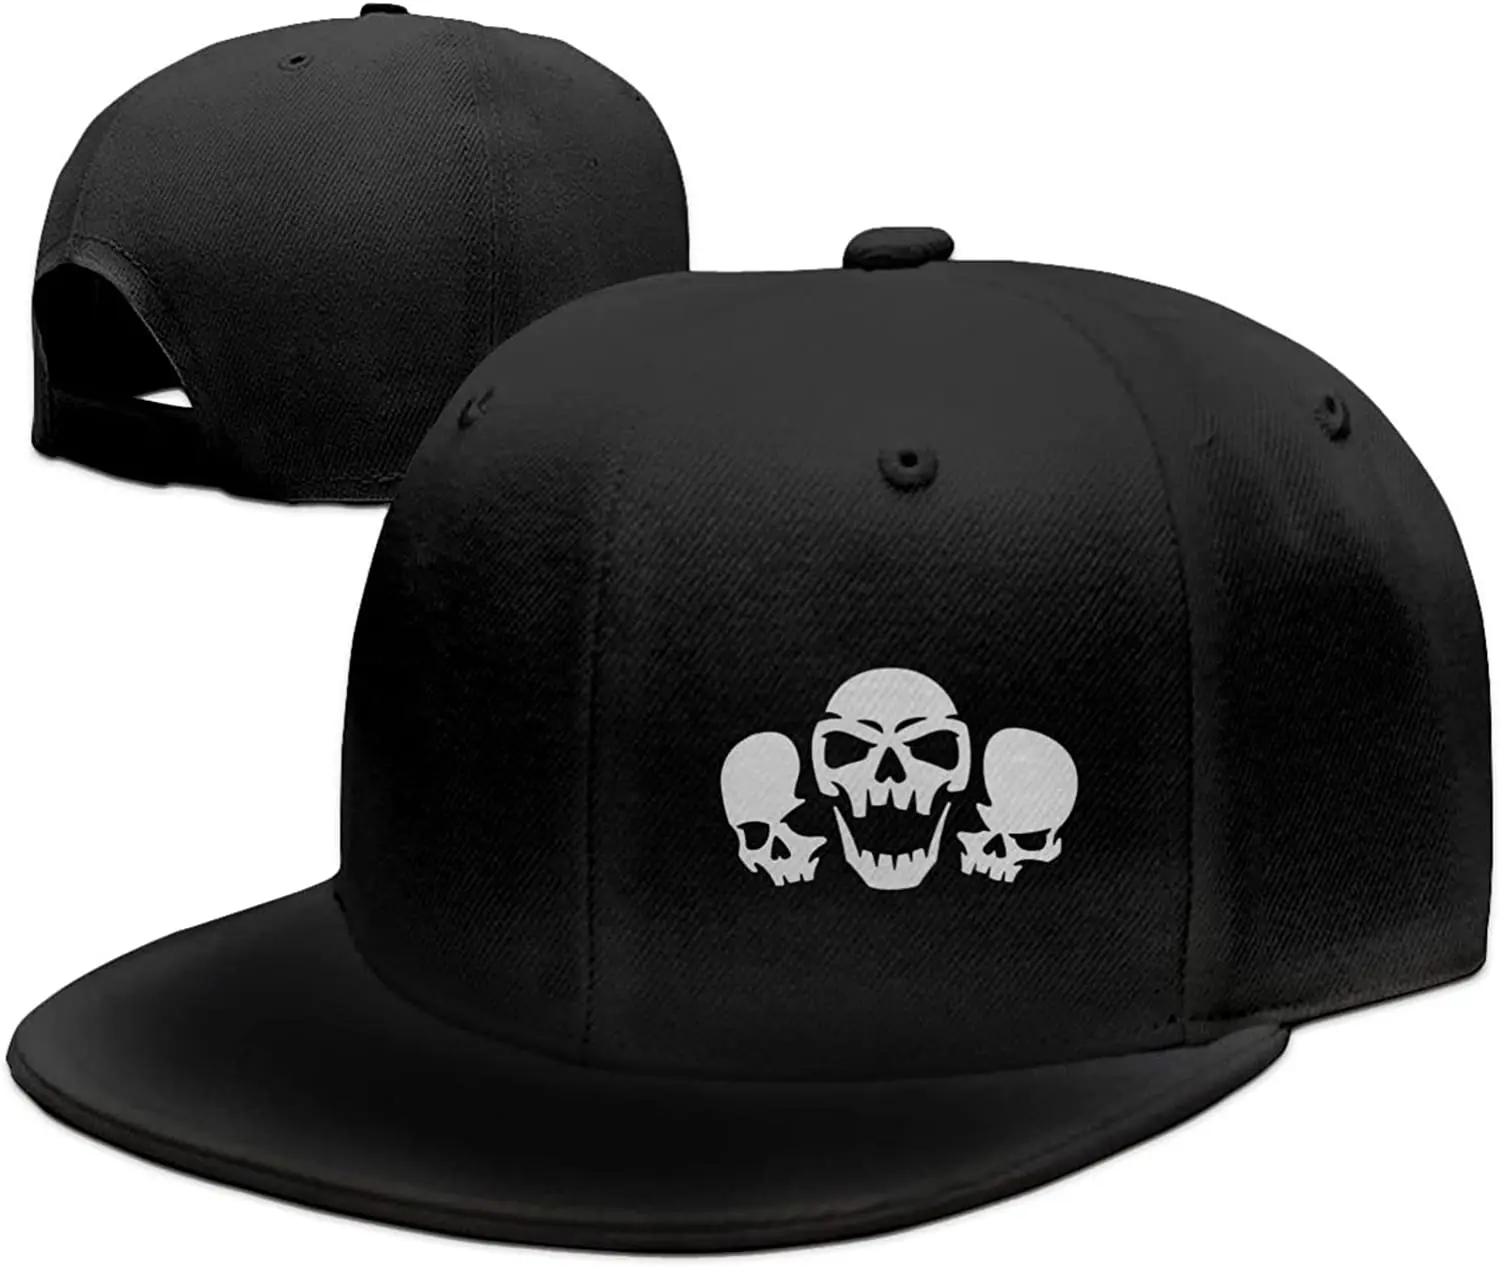 

Black Skull Snapback Hat for Men Boys Baseball Cap Adjustable Funny Flat Bill Dad Trucker Caps Fitted Fashion Hip Hop Hats